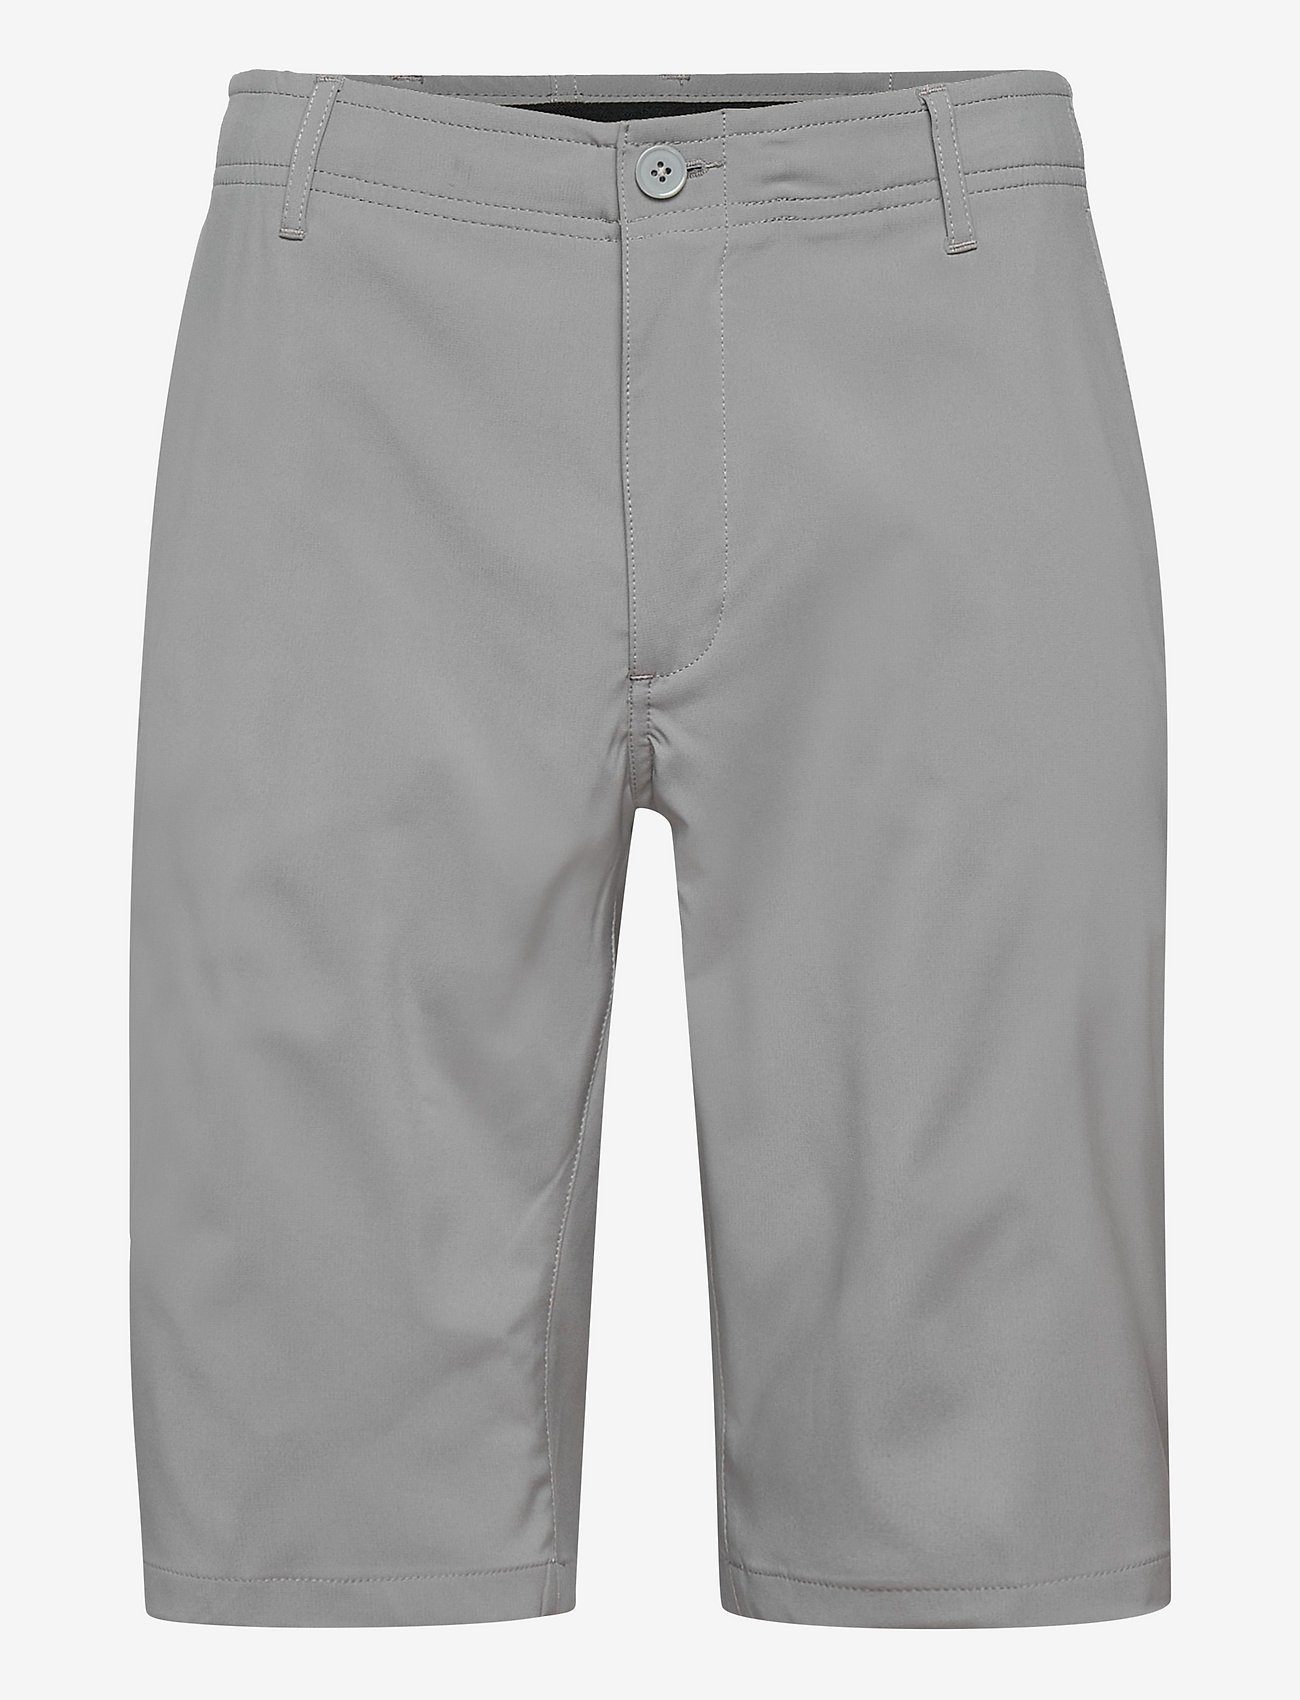 Abacus - Men Cleek flex shorts - golfshorts - grey - 0